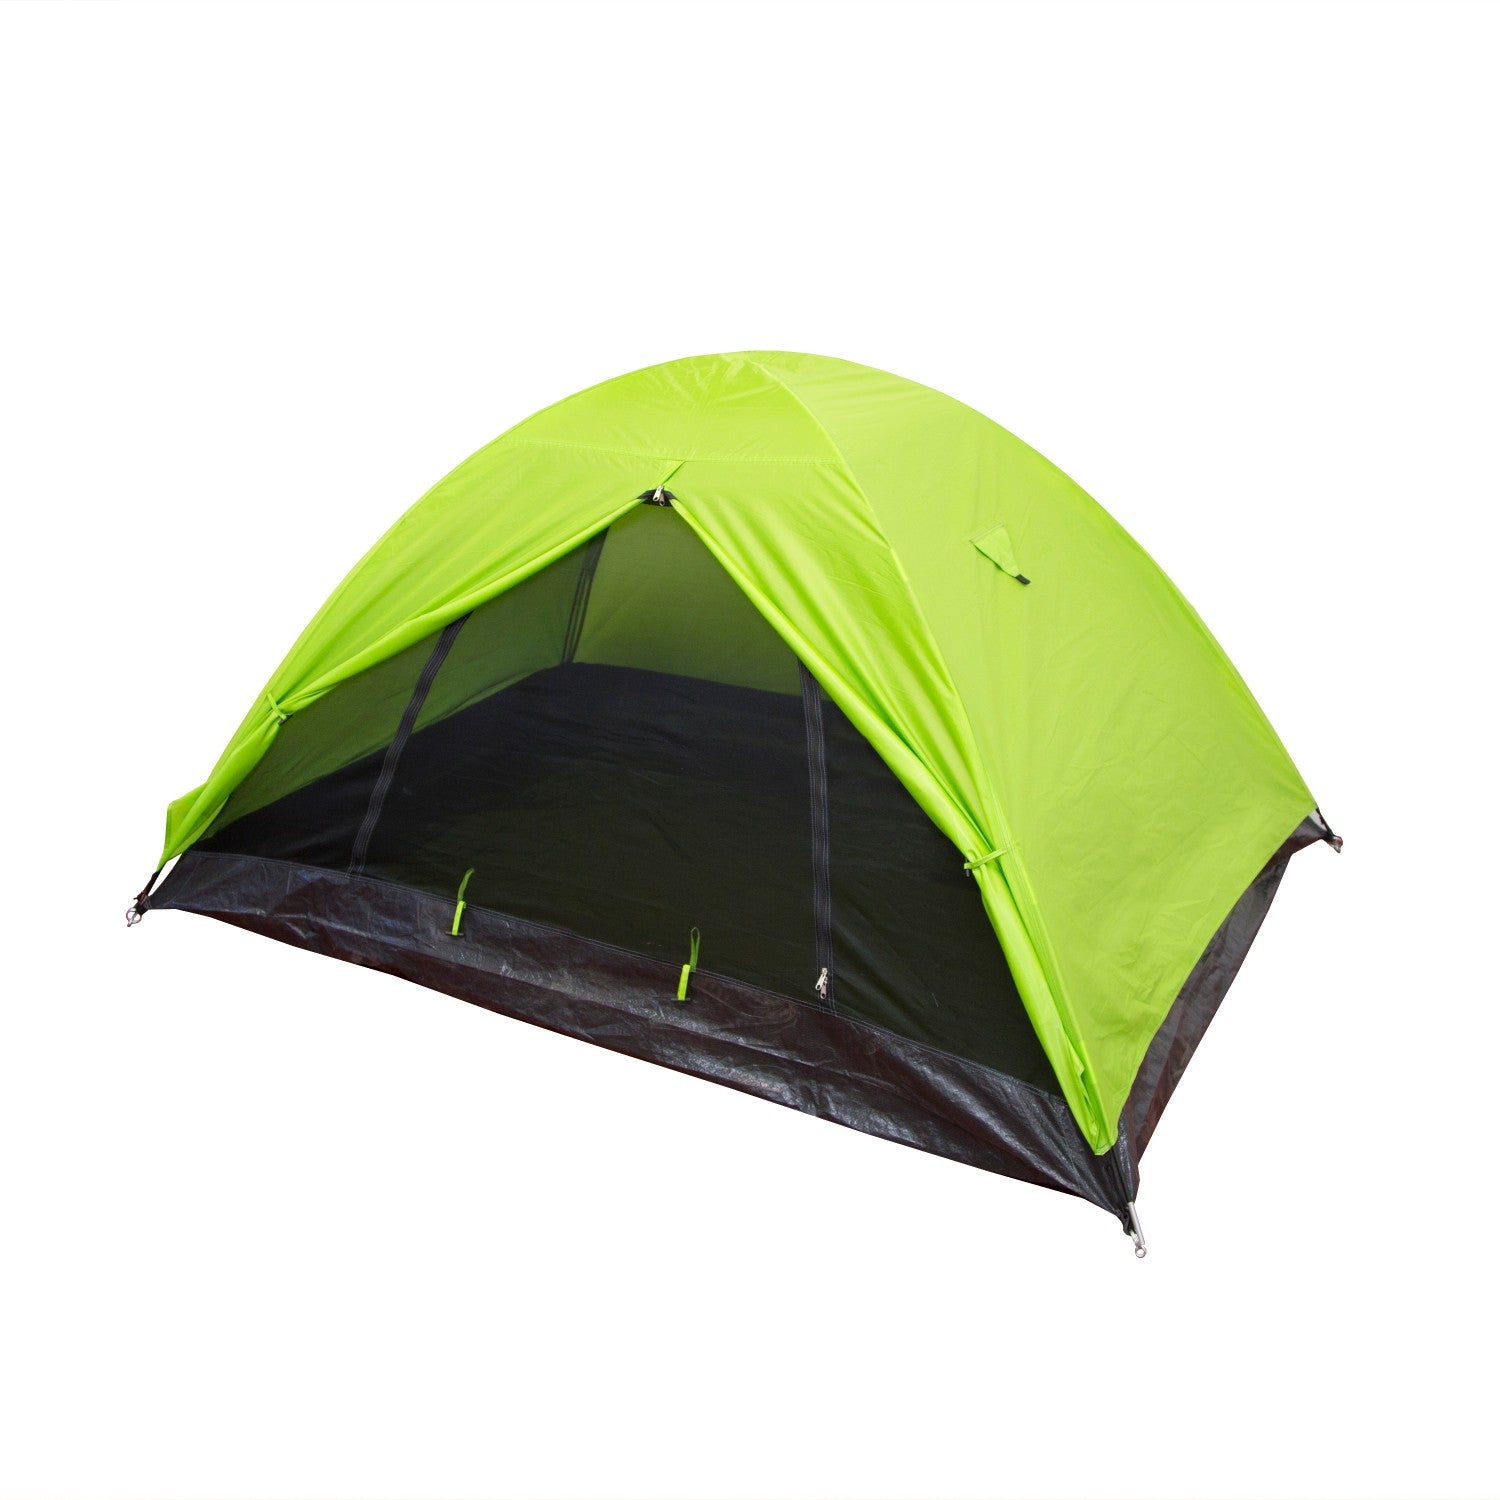 Starlite I Mesh Backpack Tent with Full Rain Fly - Stansport